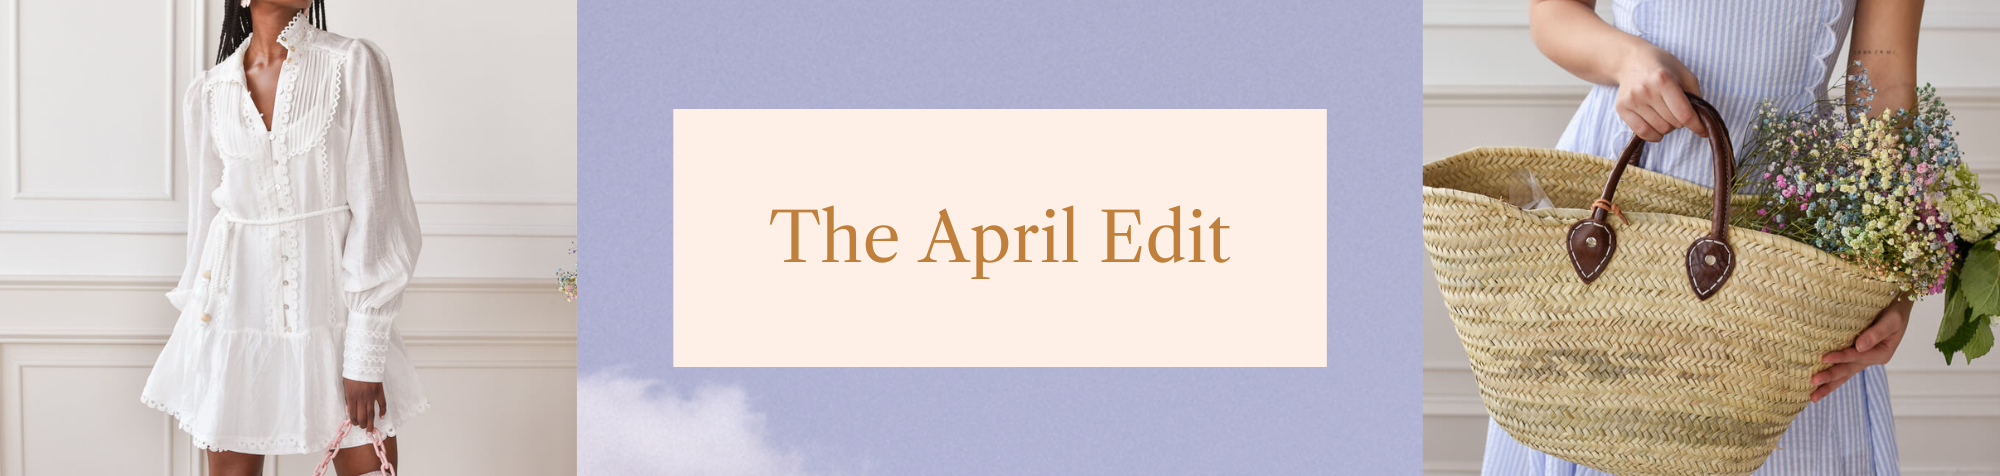 The April Edit